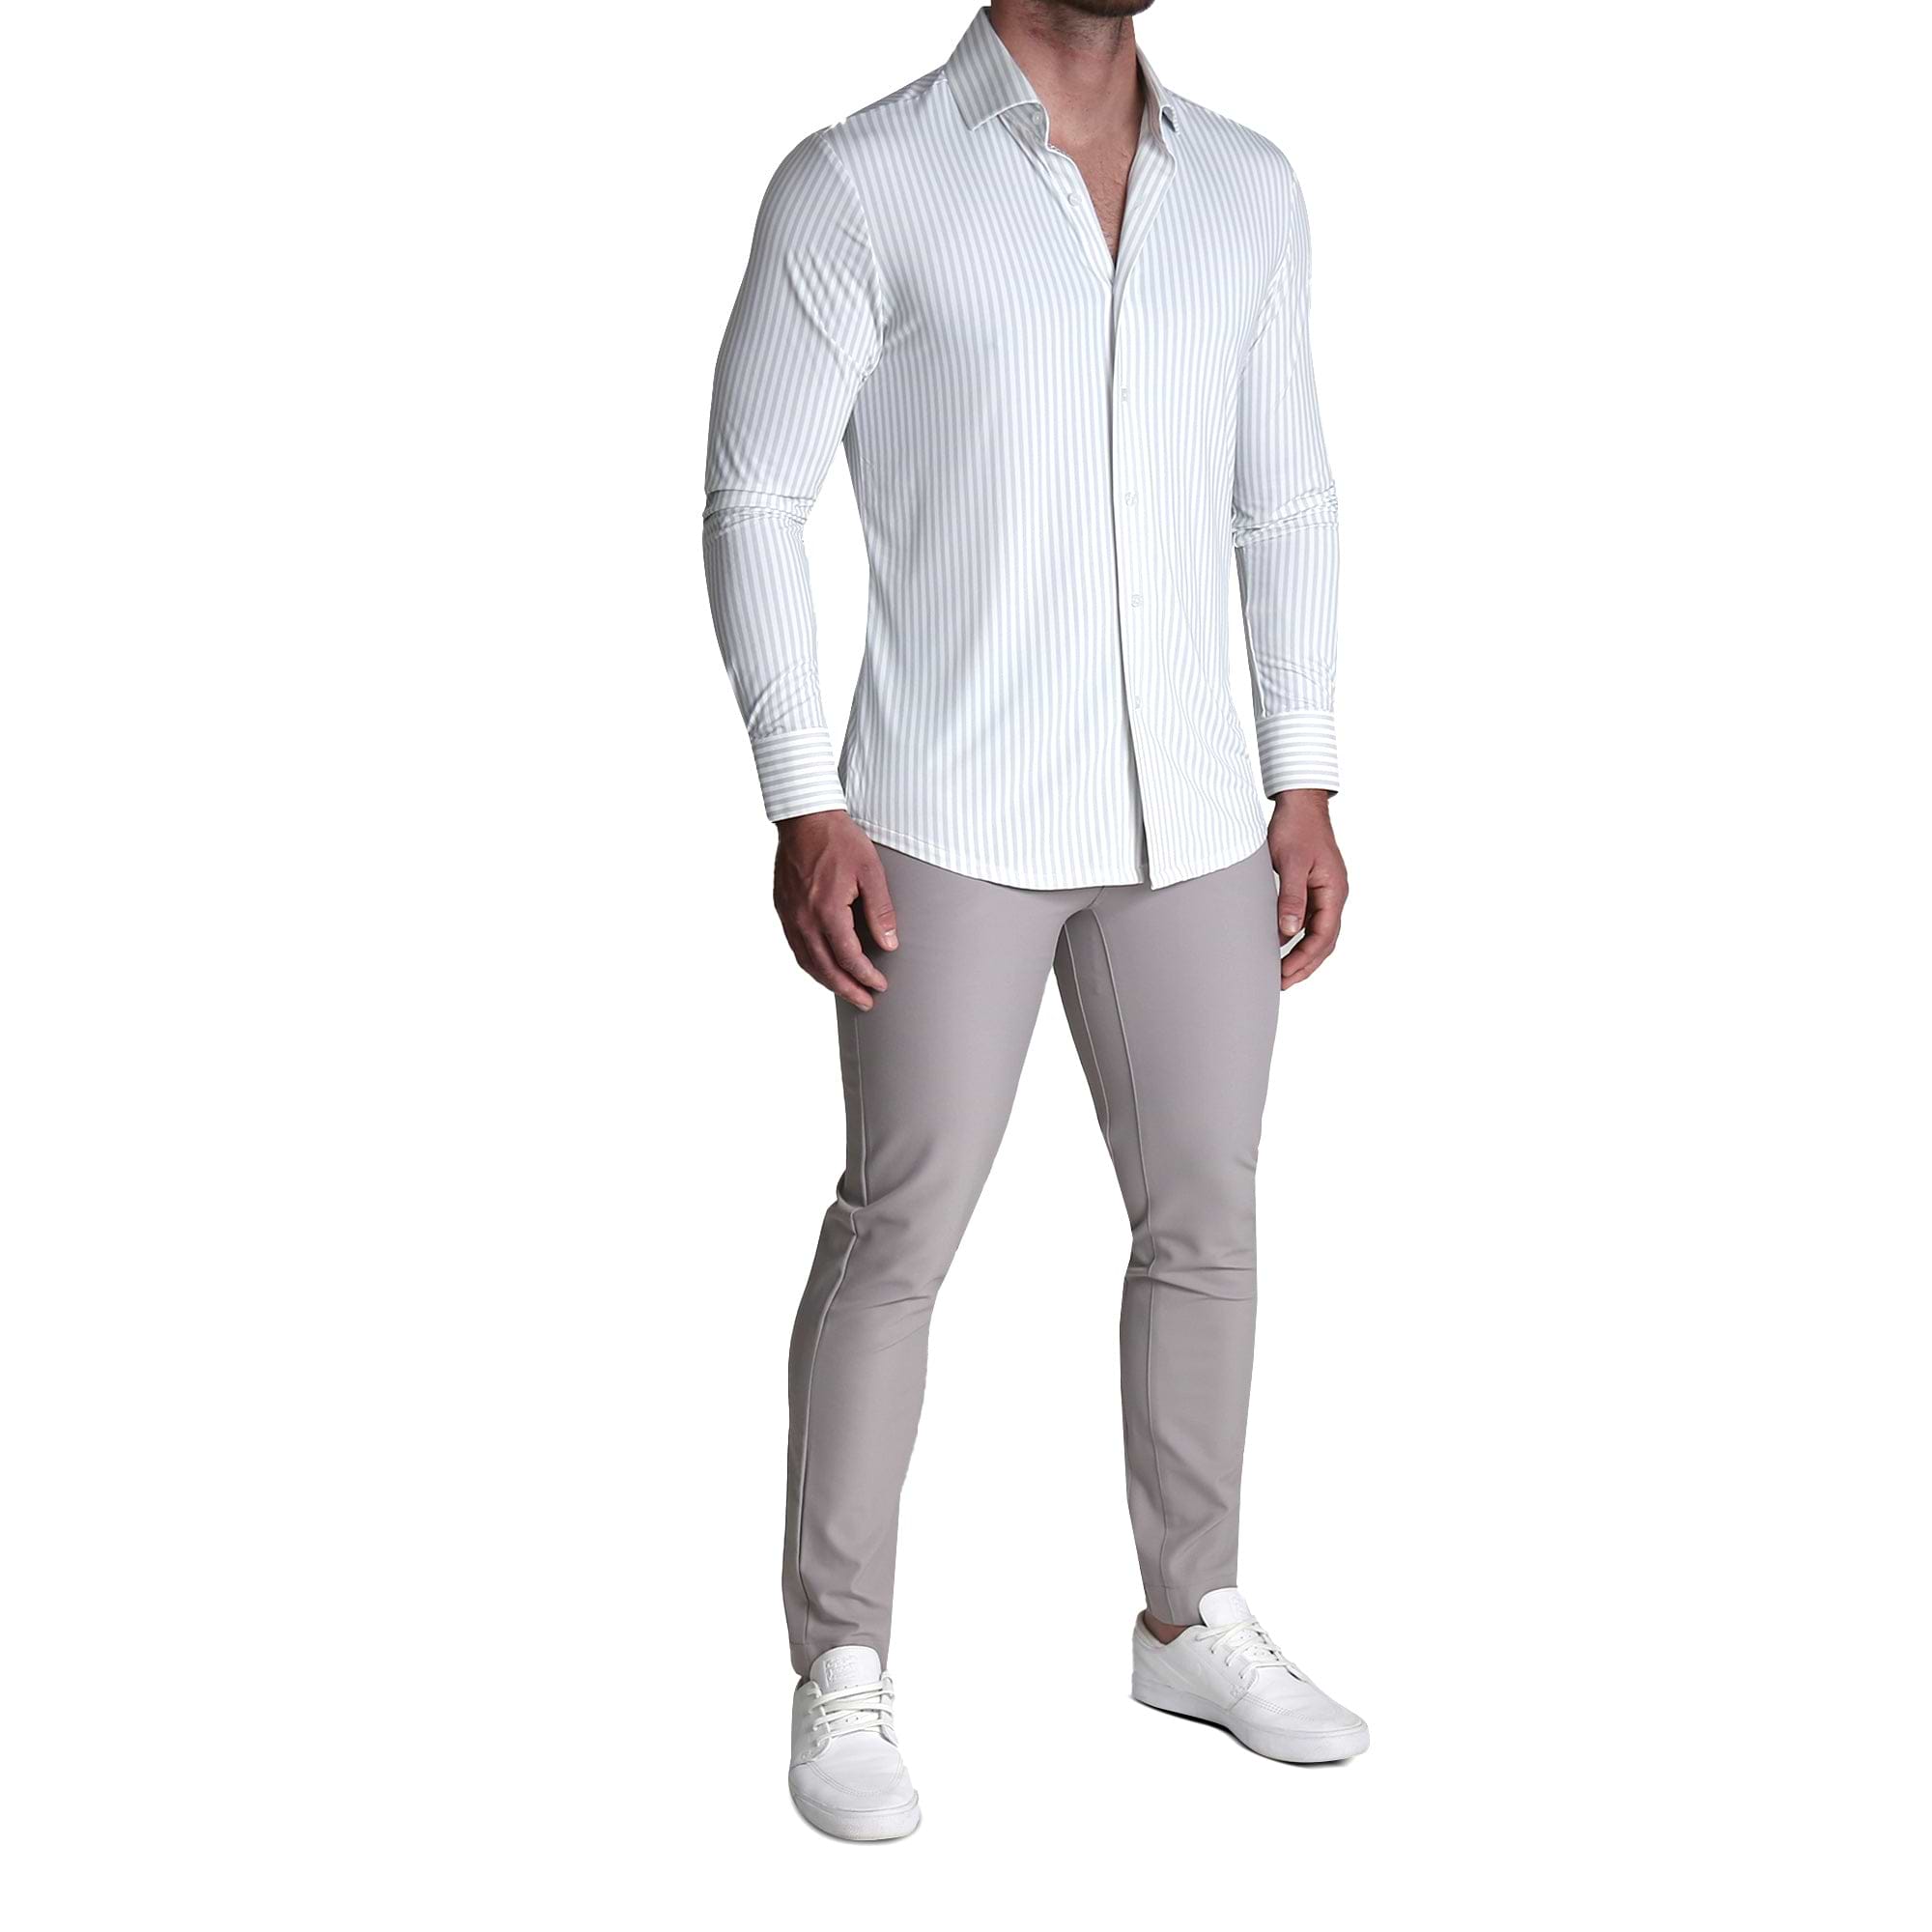 Sport Shirt - Light Grey Bengal Stripe